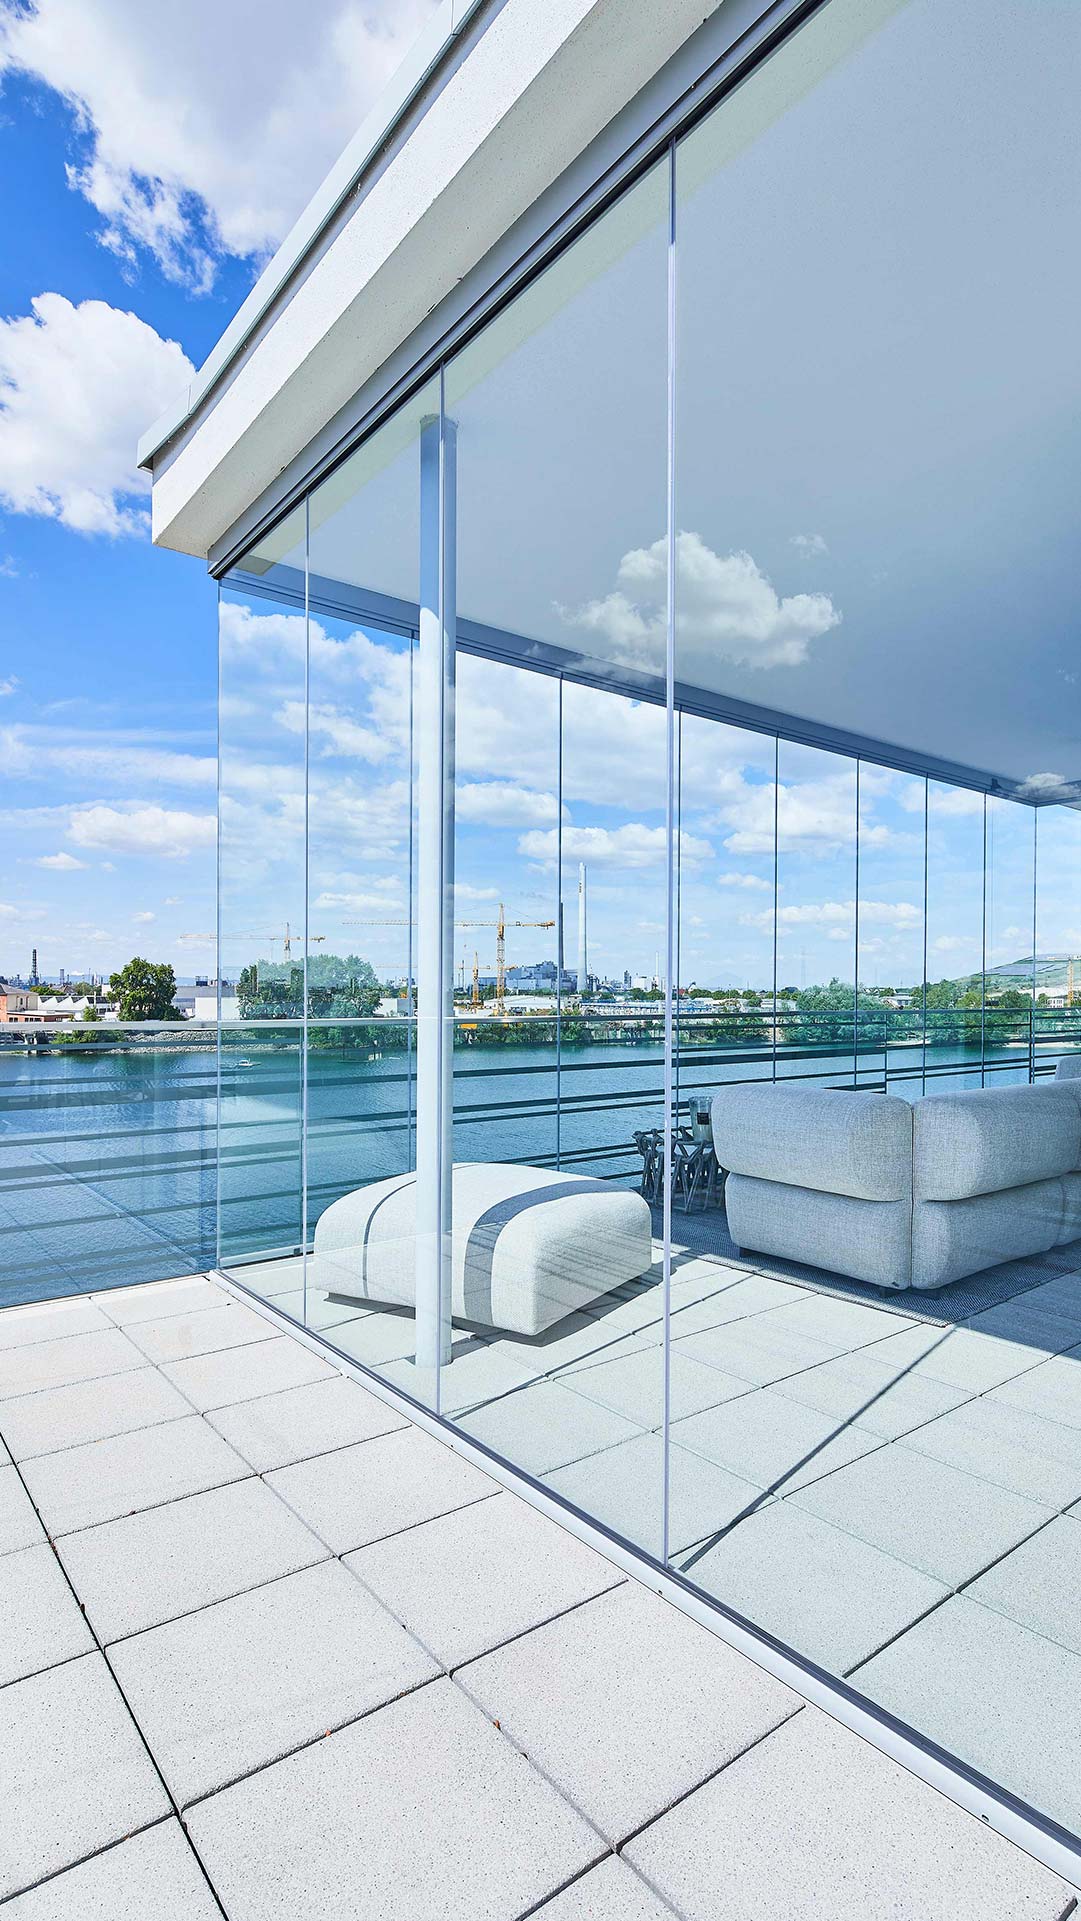 Polstermöbel auf verglastem Balkon